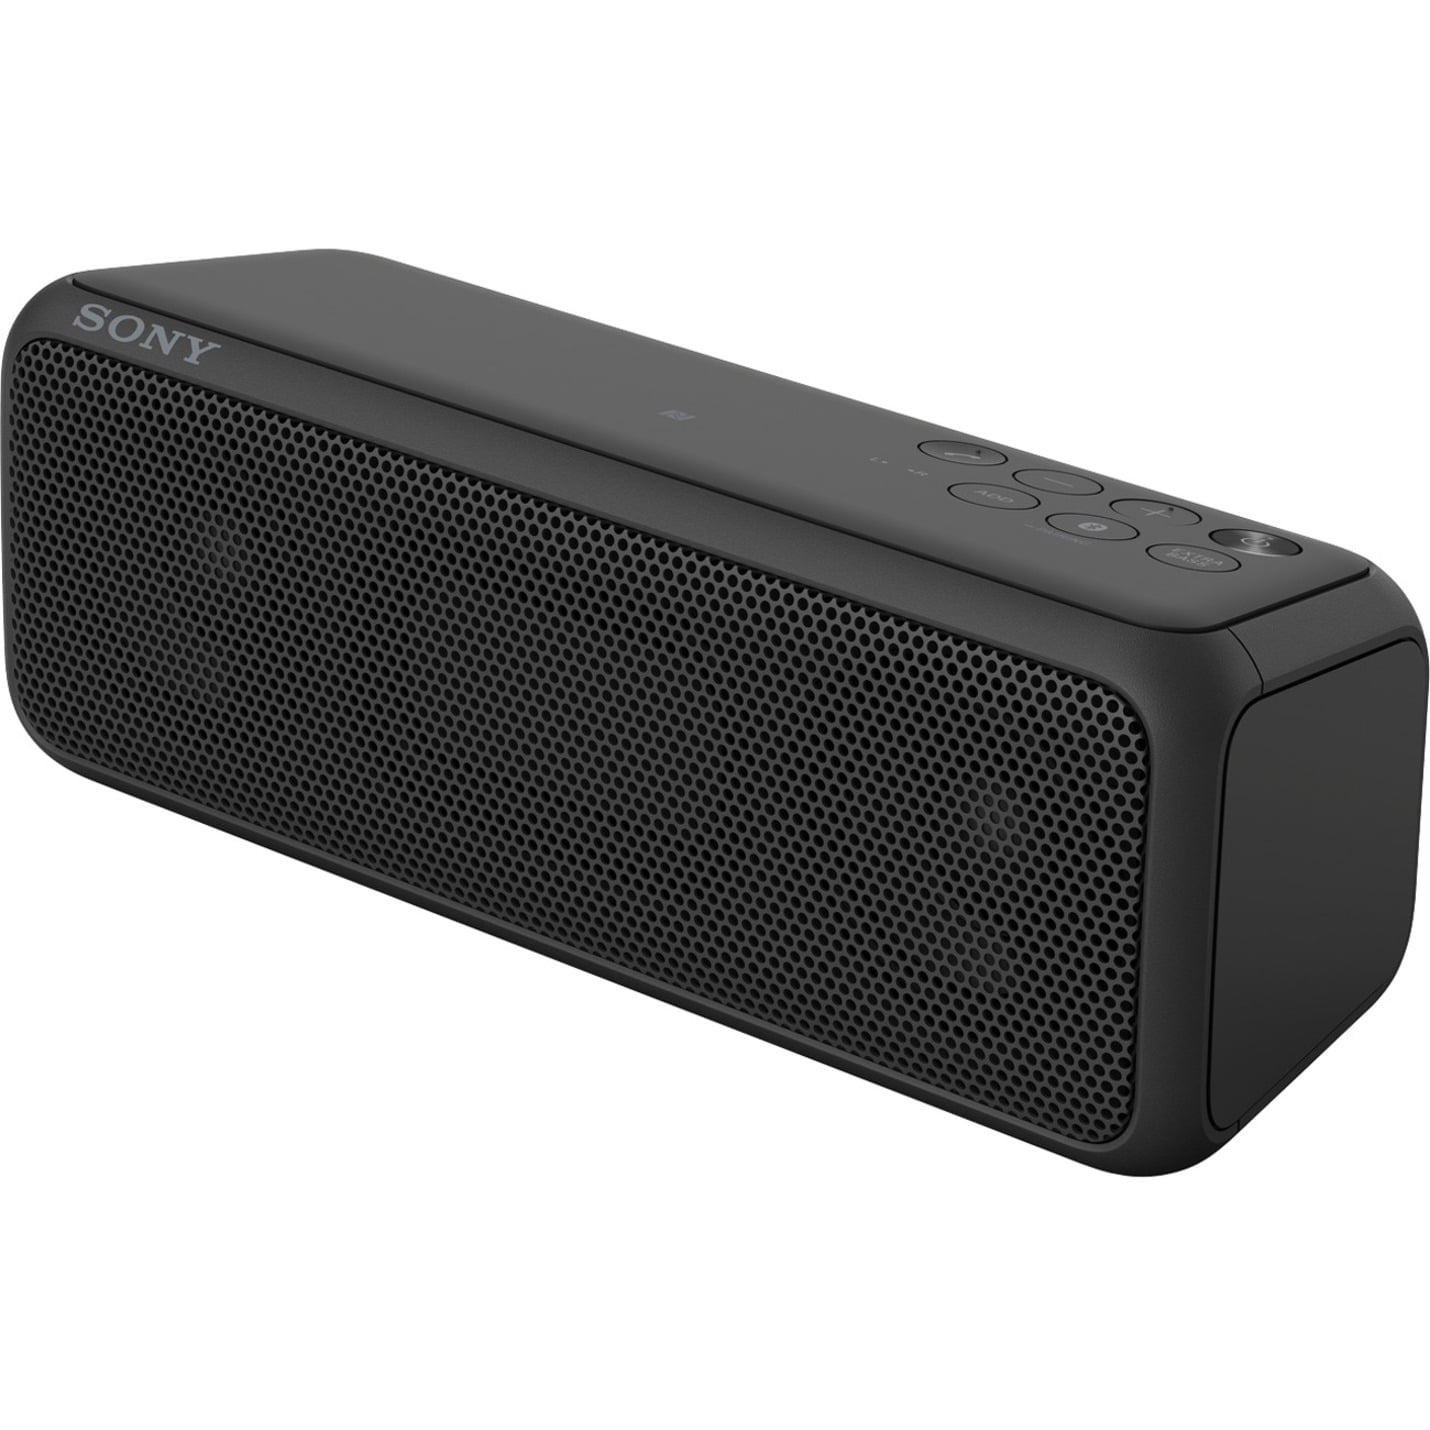 Sony Portable Bluetooth Speaker, Black, SRS-XB3 